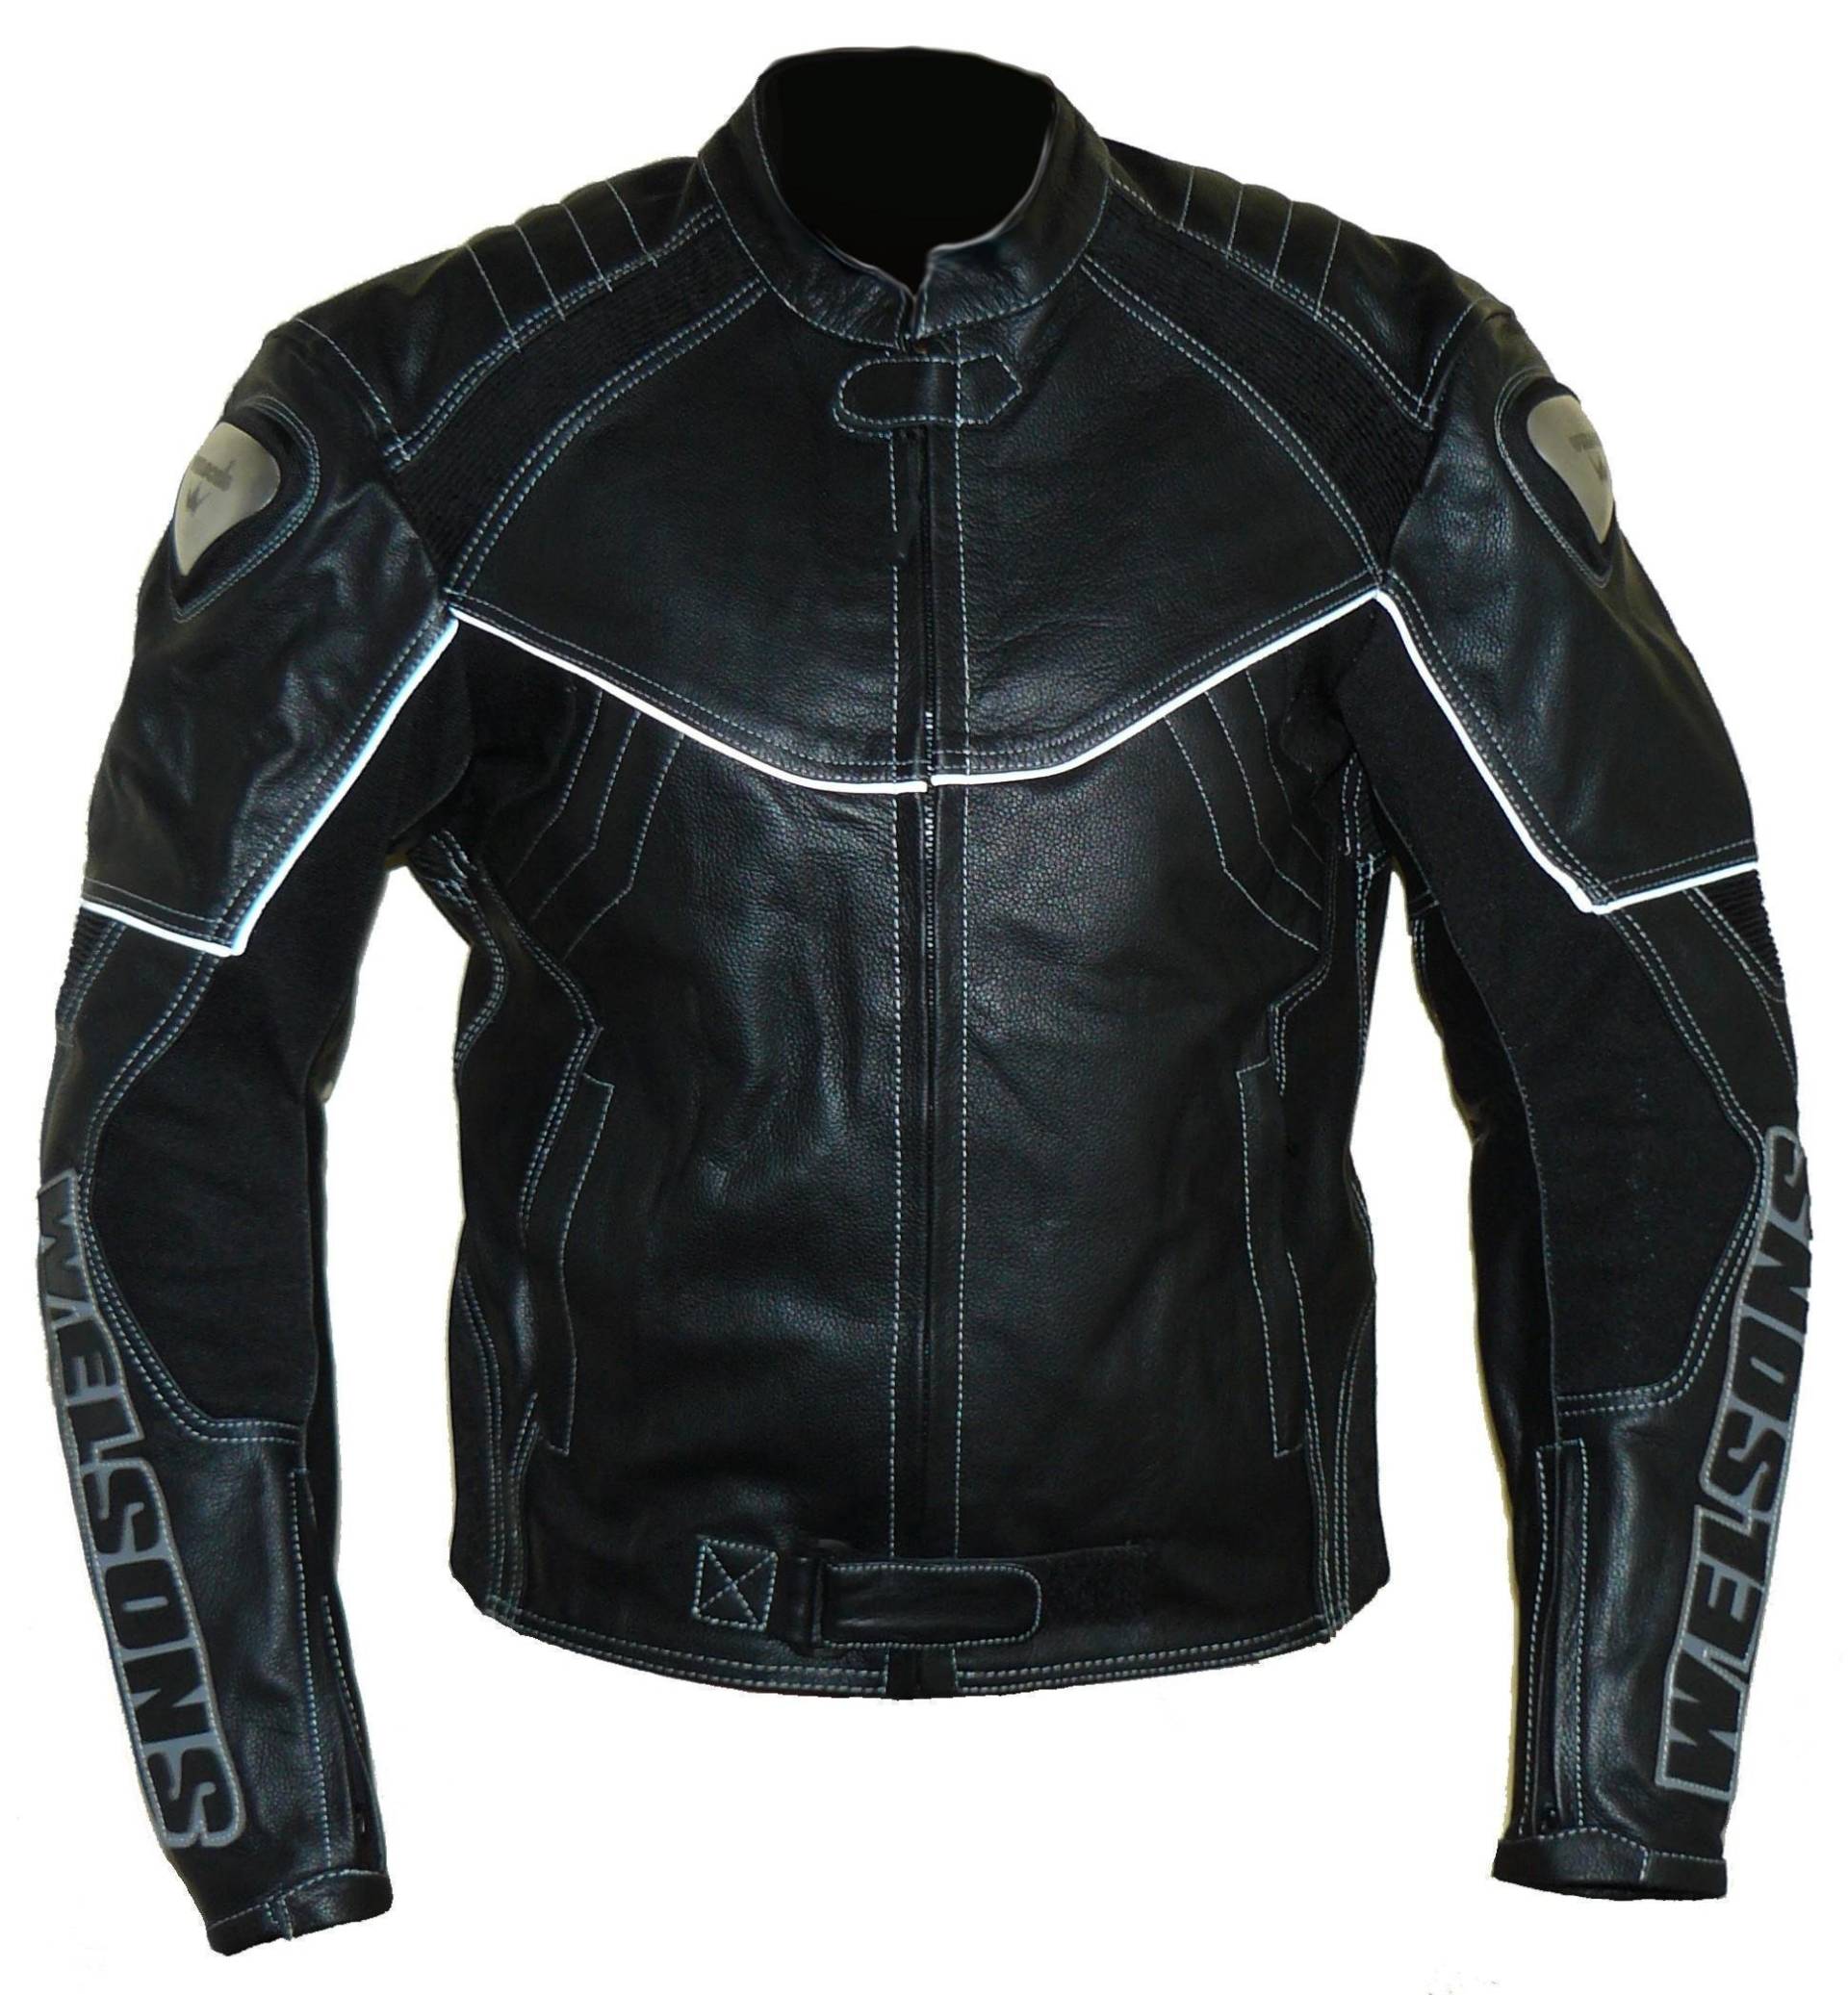 Protectwear WMB-303 Motorrad - Lederjacke,Größe : 60, schwarz von protectWEAR